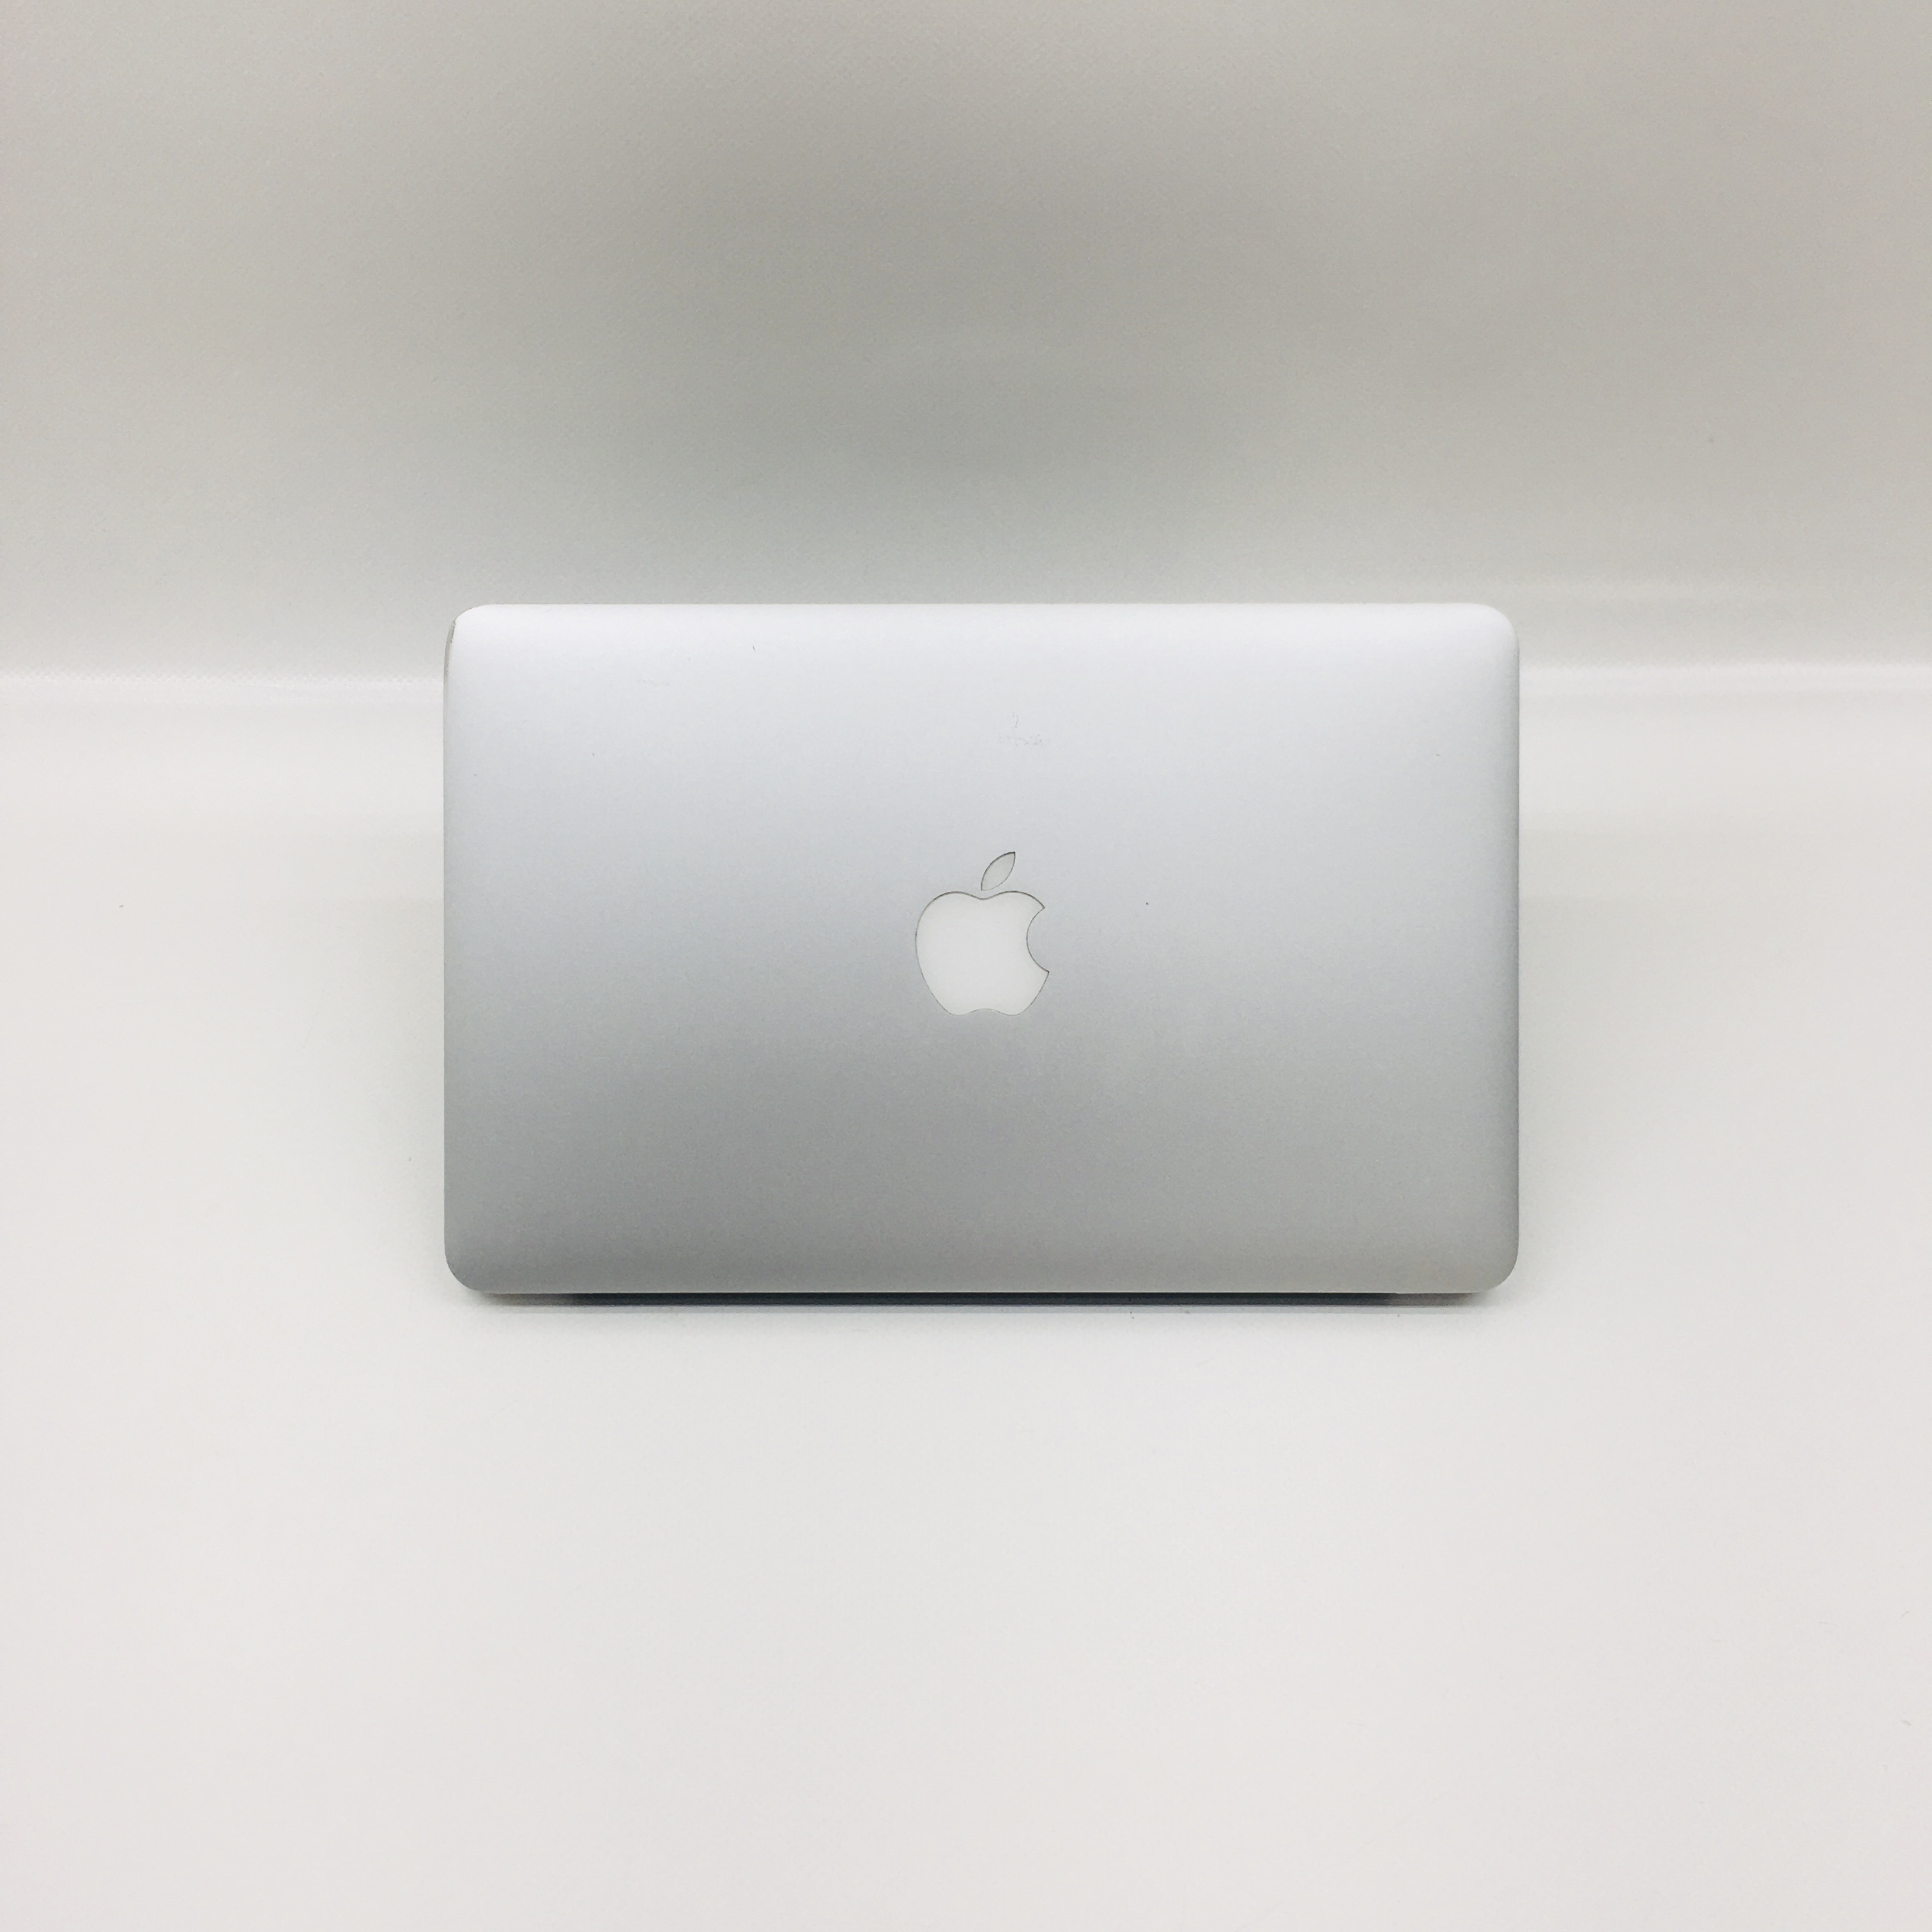 MacBook Air 11" Early 2015 (Intel Core i5 1.6 GHz 4 GB RAM 128 GB SSD), Intel Core i5 1.6 GHz, 4 GB RAM, 128 GB SSD, image 5